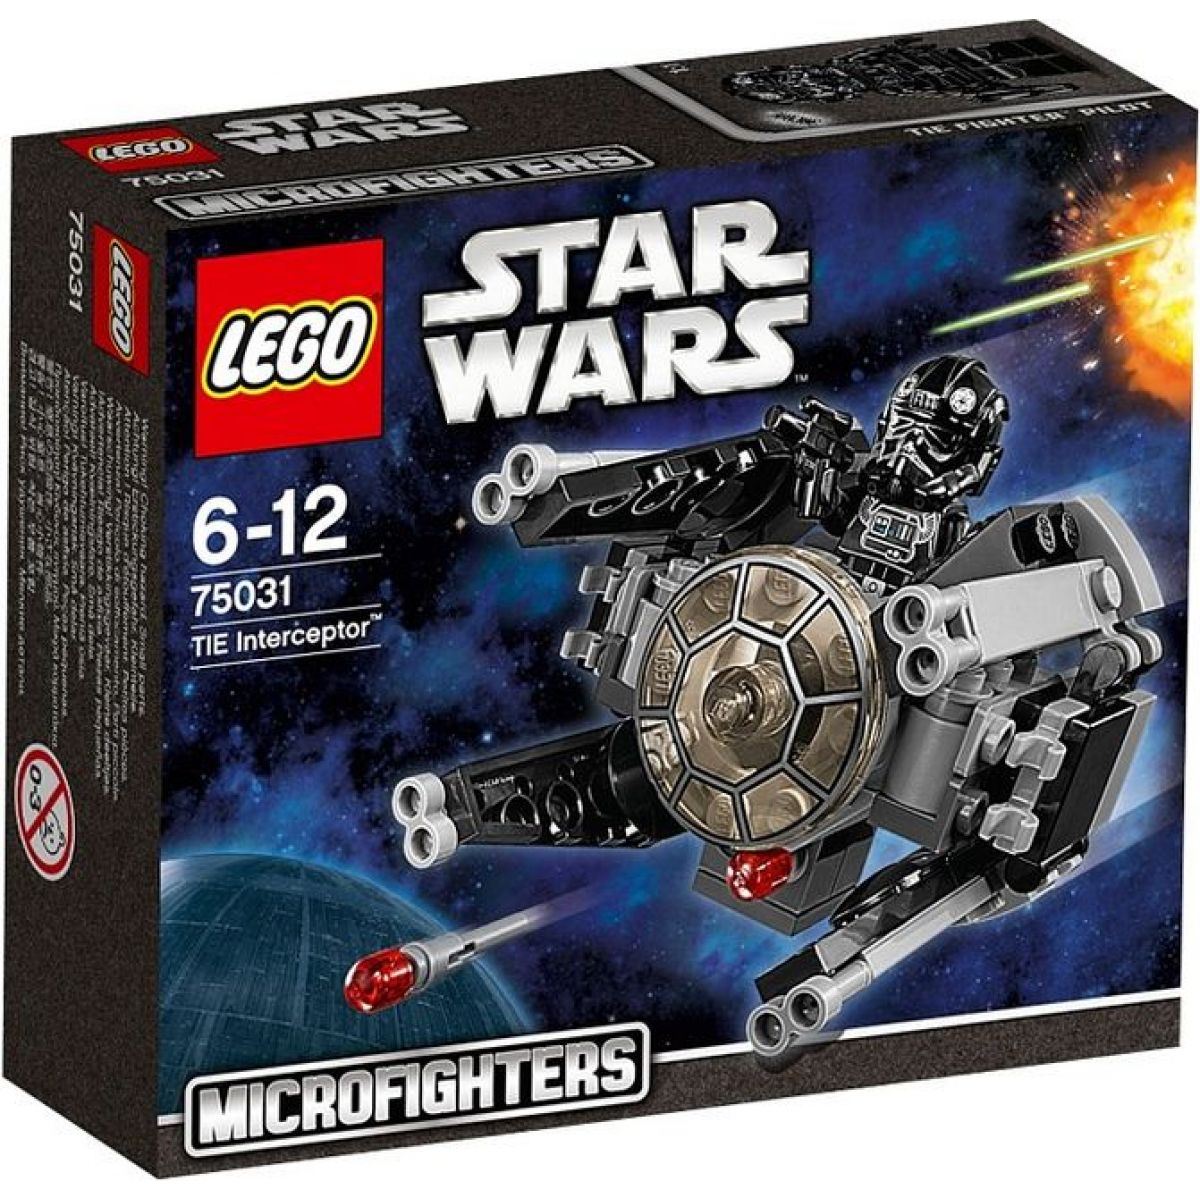 LEGO Star Wars 75031 Tie Interceptor